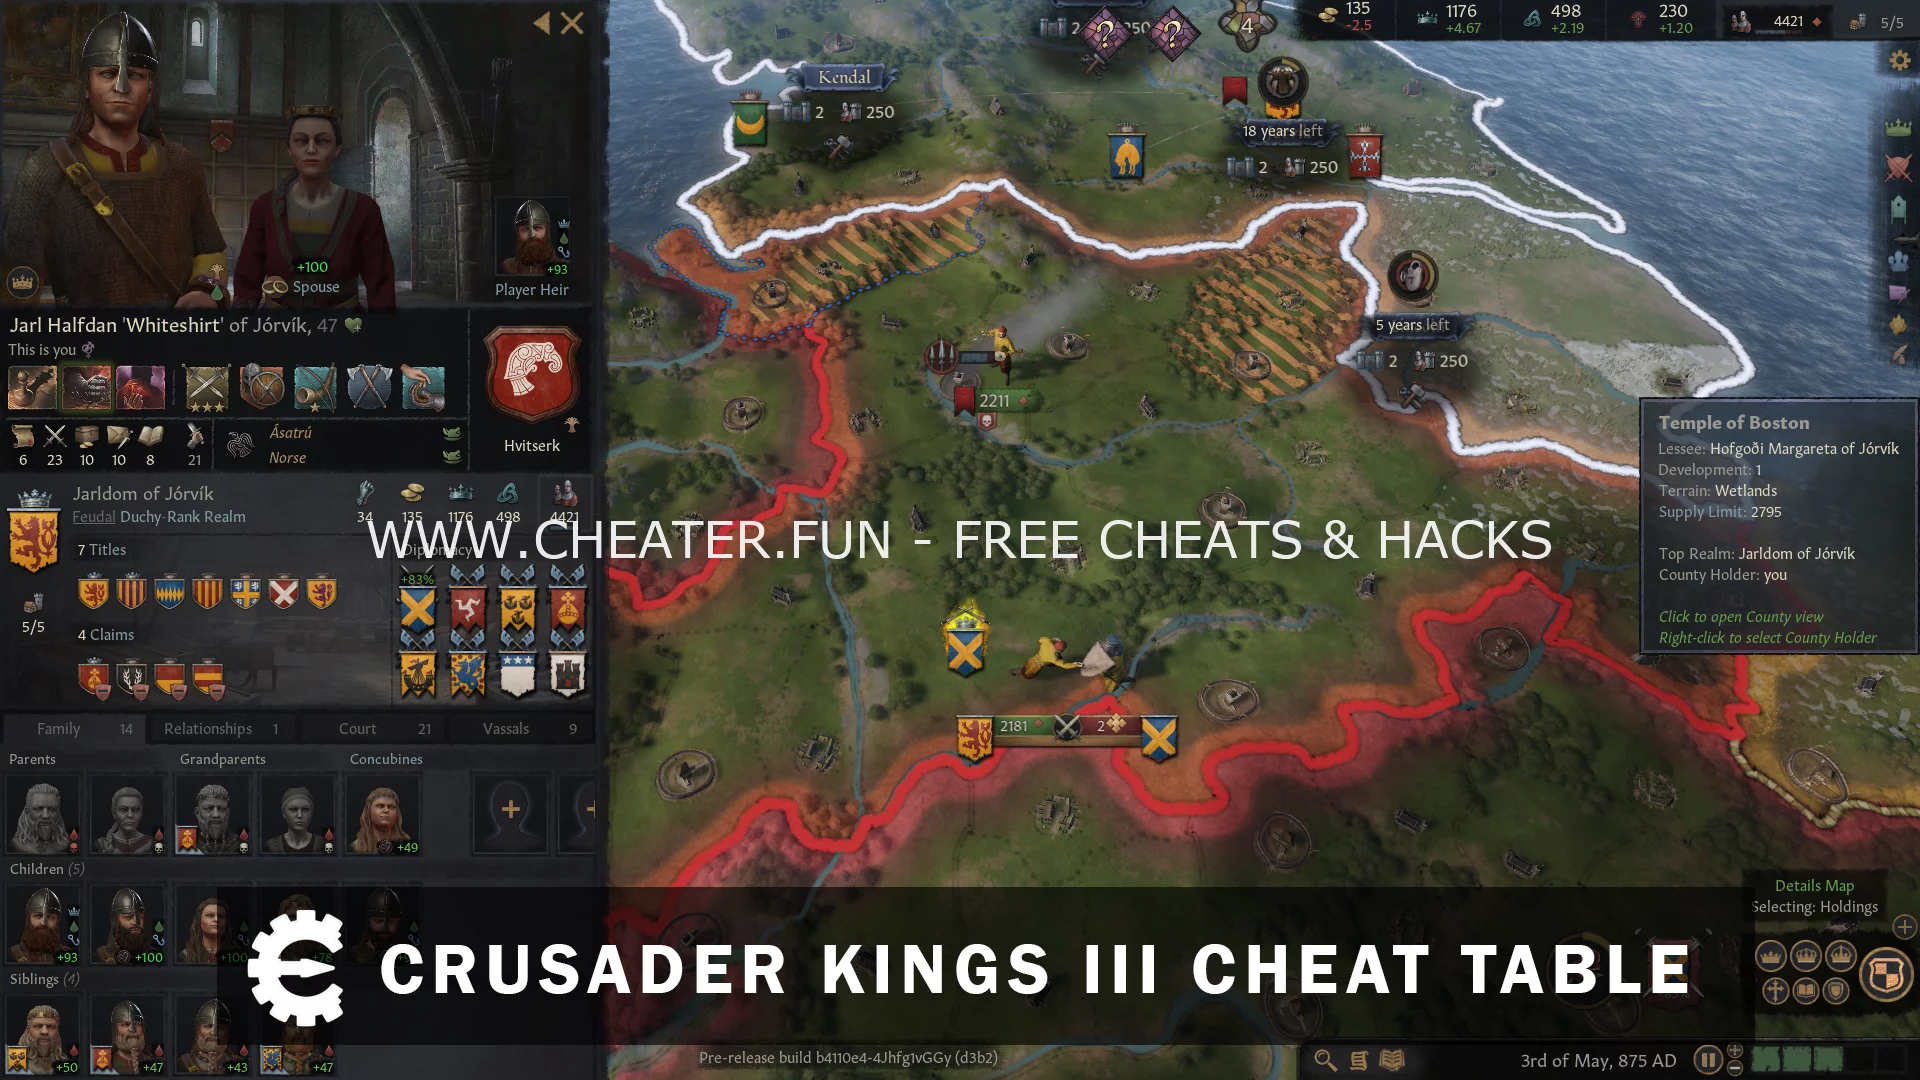 Crusader Kings III - Cheat Tables